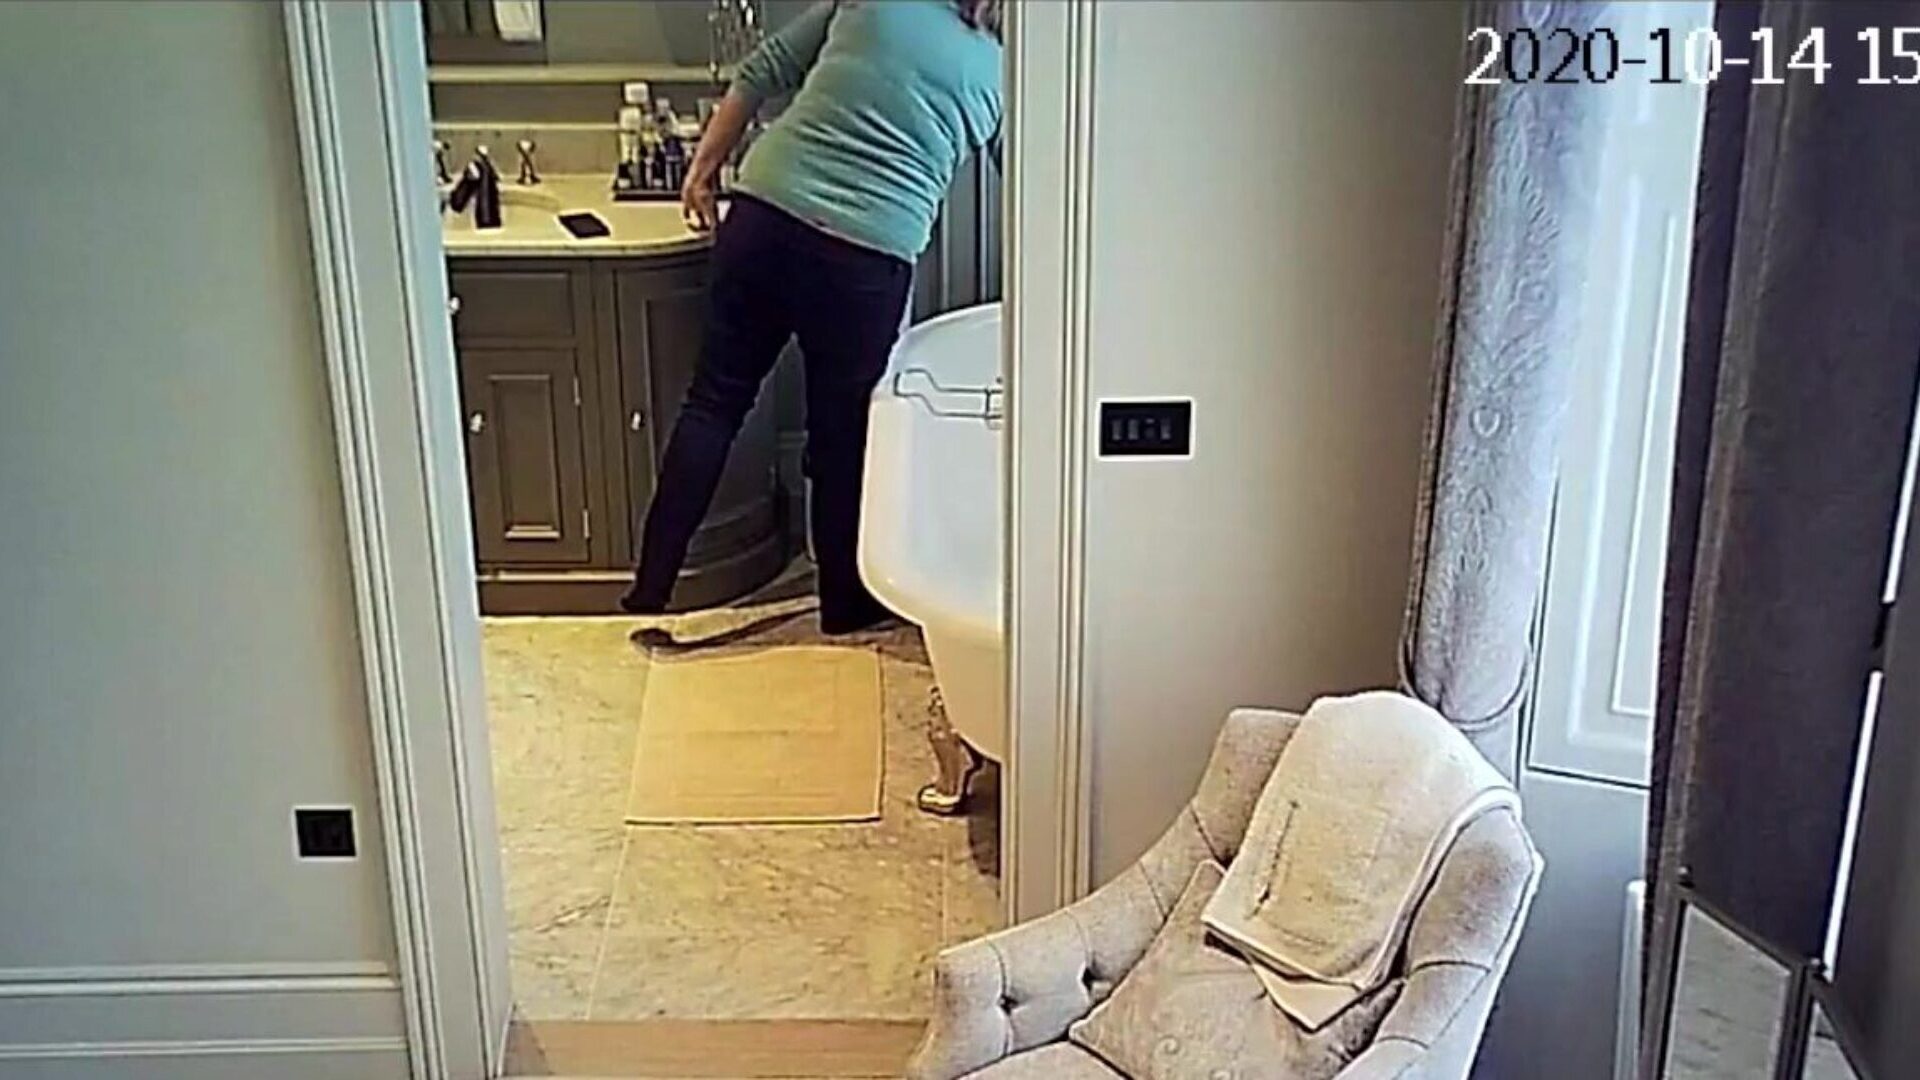 ipcam אמא שאני אוהב לדפוק שומן בחדר הרחצה מבוגר מתרחץ שהיא נמצאת במצלמת אבטחה